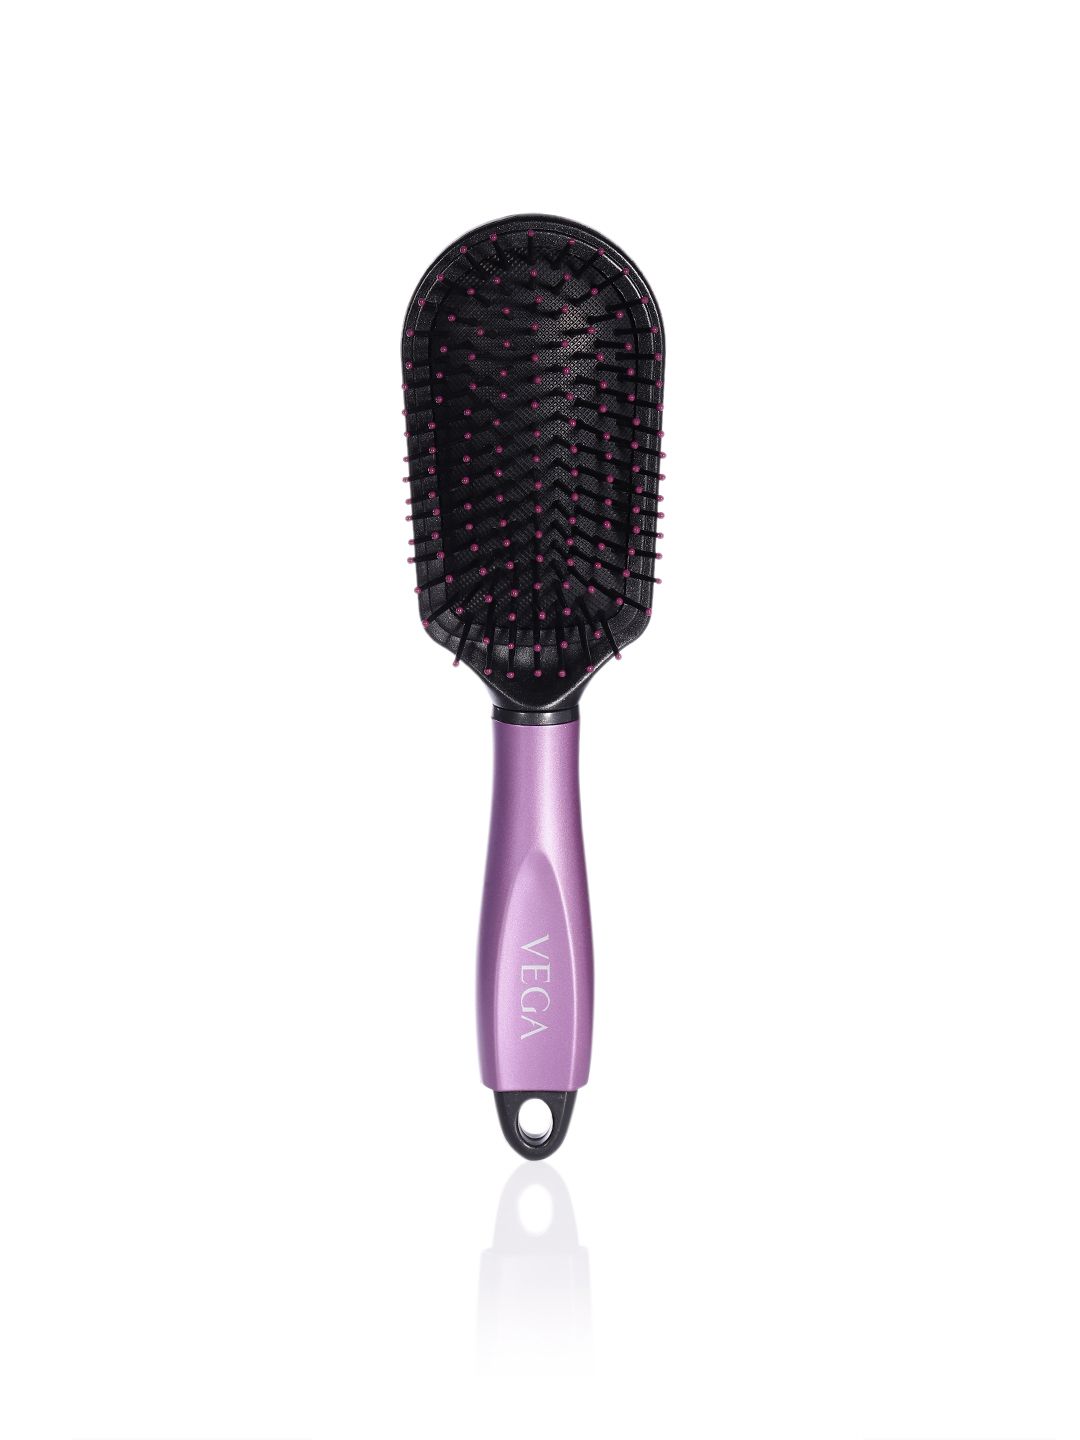 VEGA Unisex Black & Purple Cushioned Paddle Hair Brush with Cleaner E18-CB Price in India